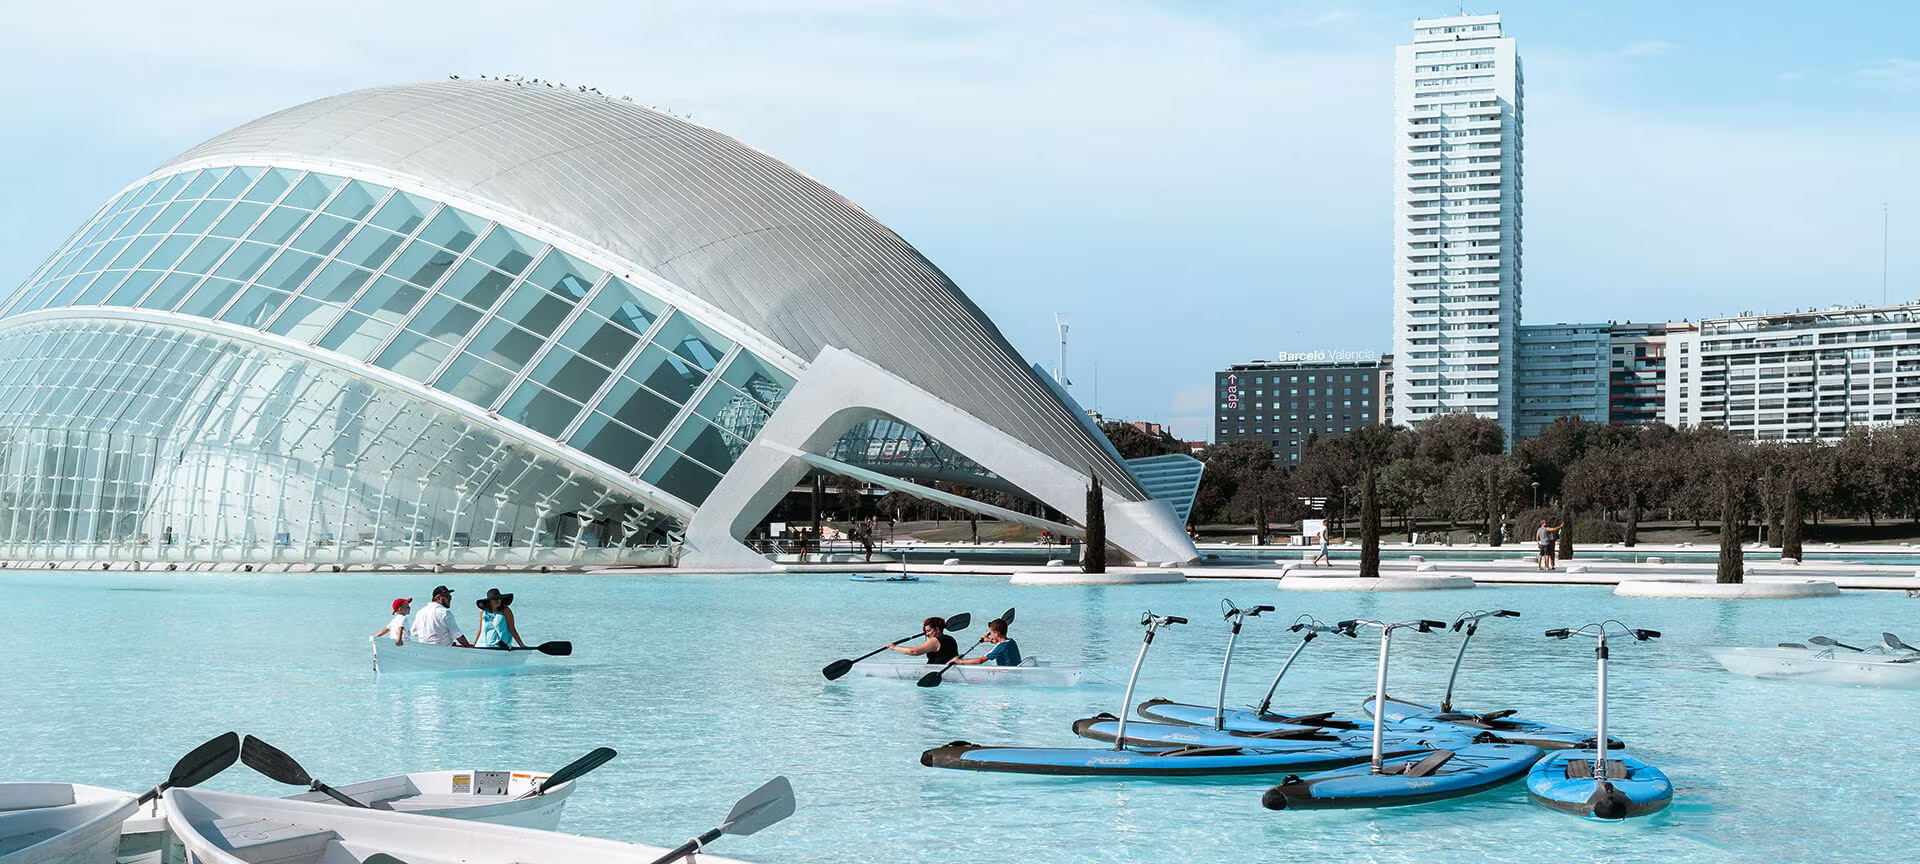 Valencia best european cities to visit